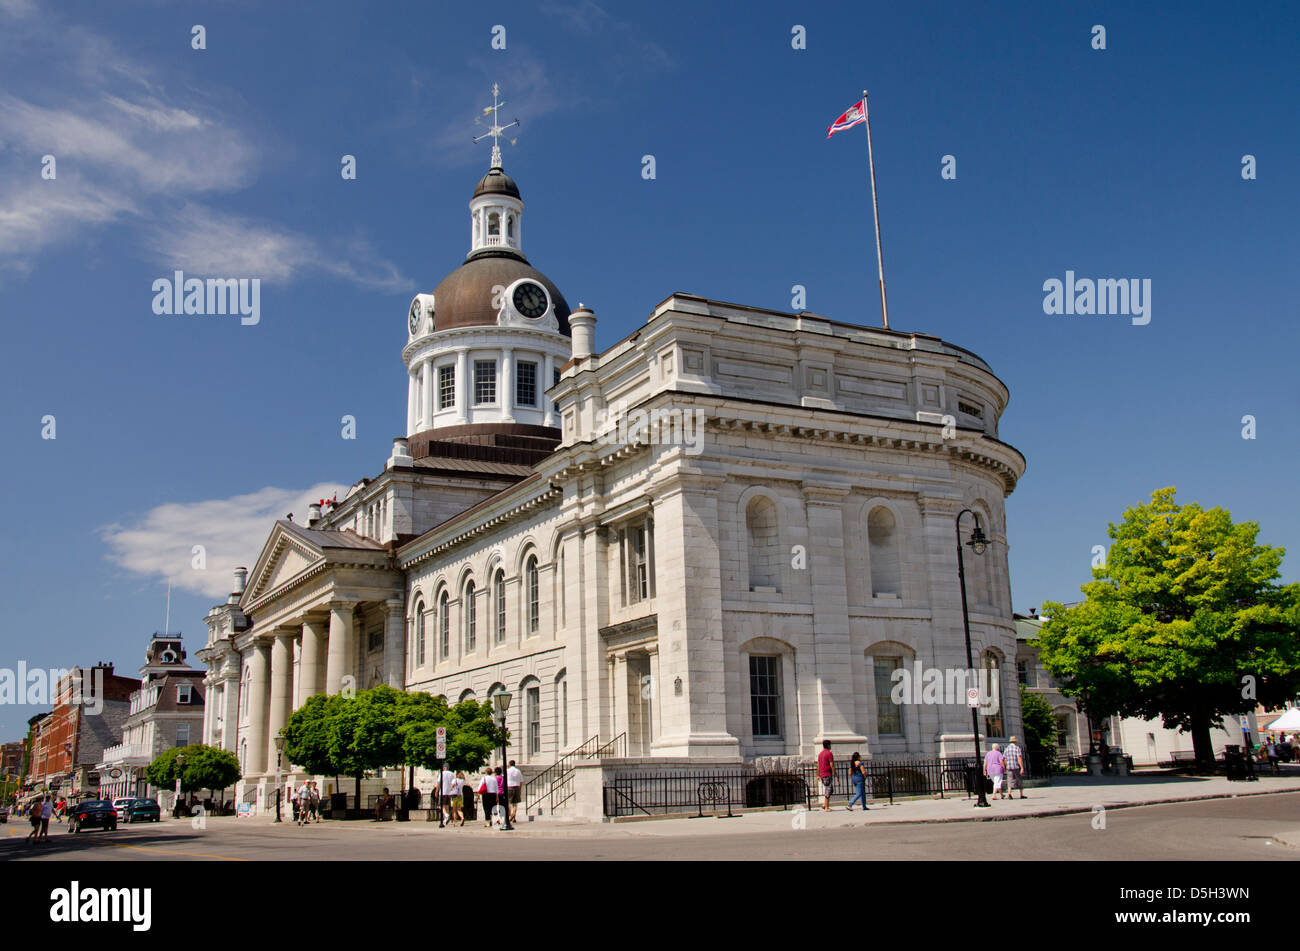 Canada, Ontario, Kingston. Downtown Kingston City Hall, National Historic Site, c. 1842. Stock Photo